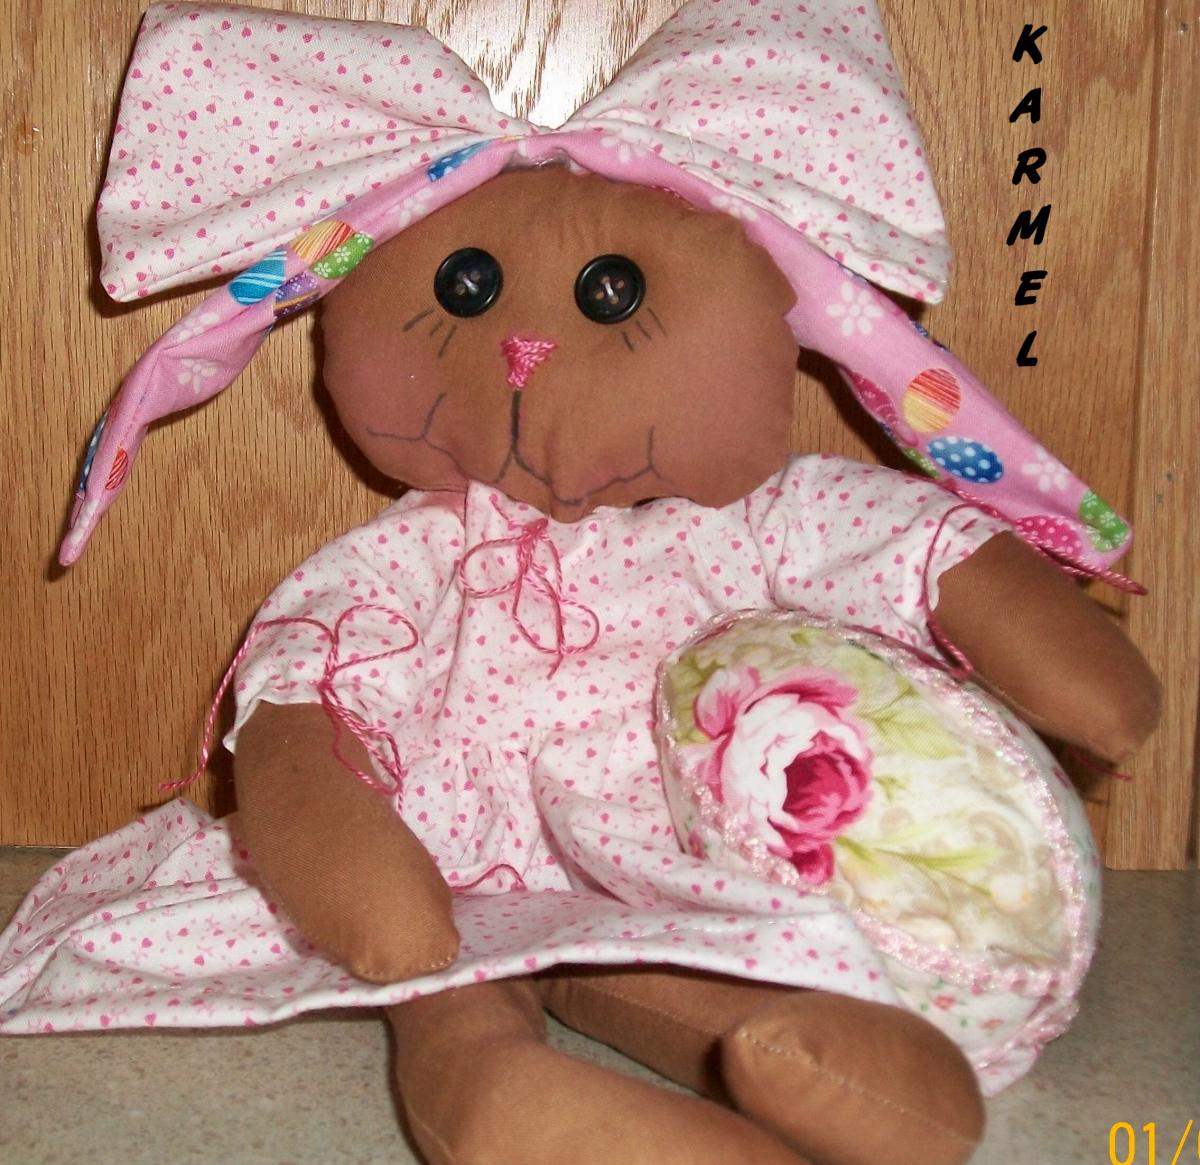 Karmel, A Chocolate Bunny Doll